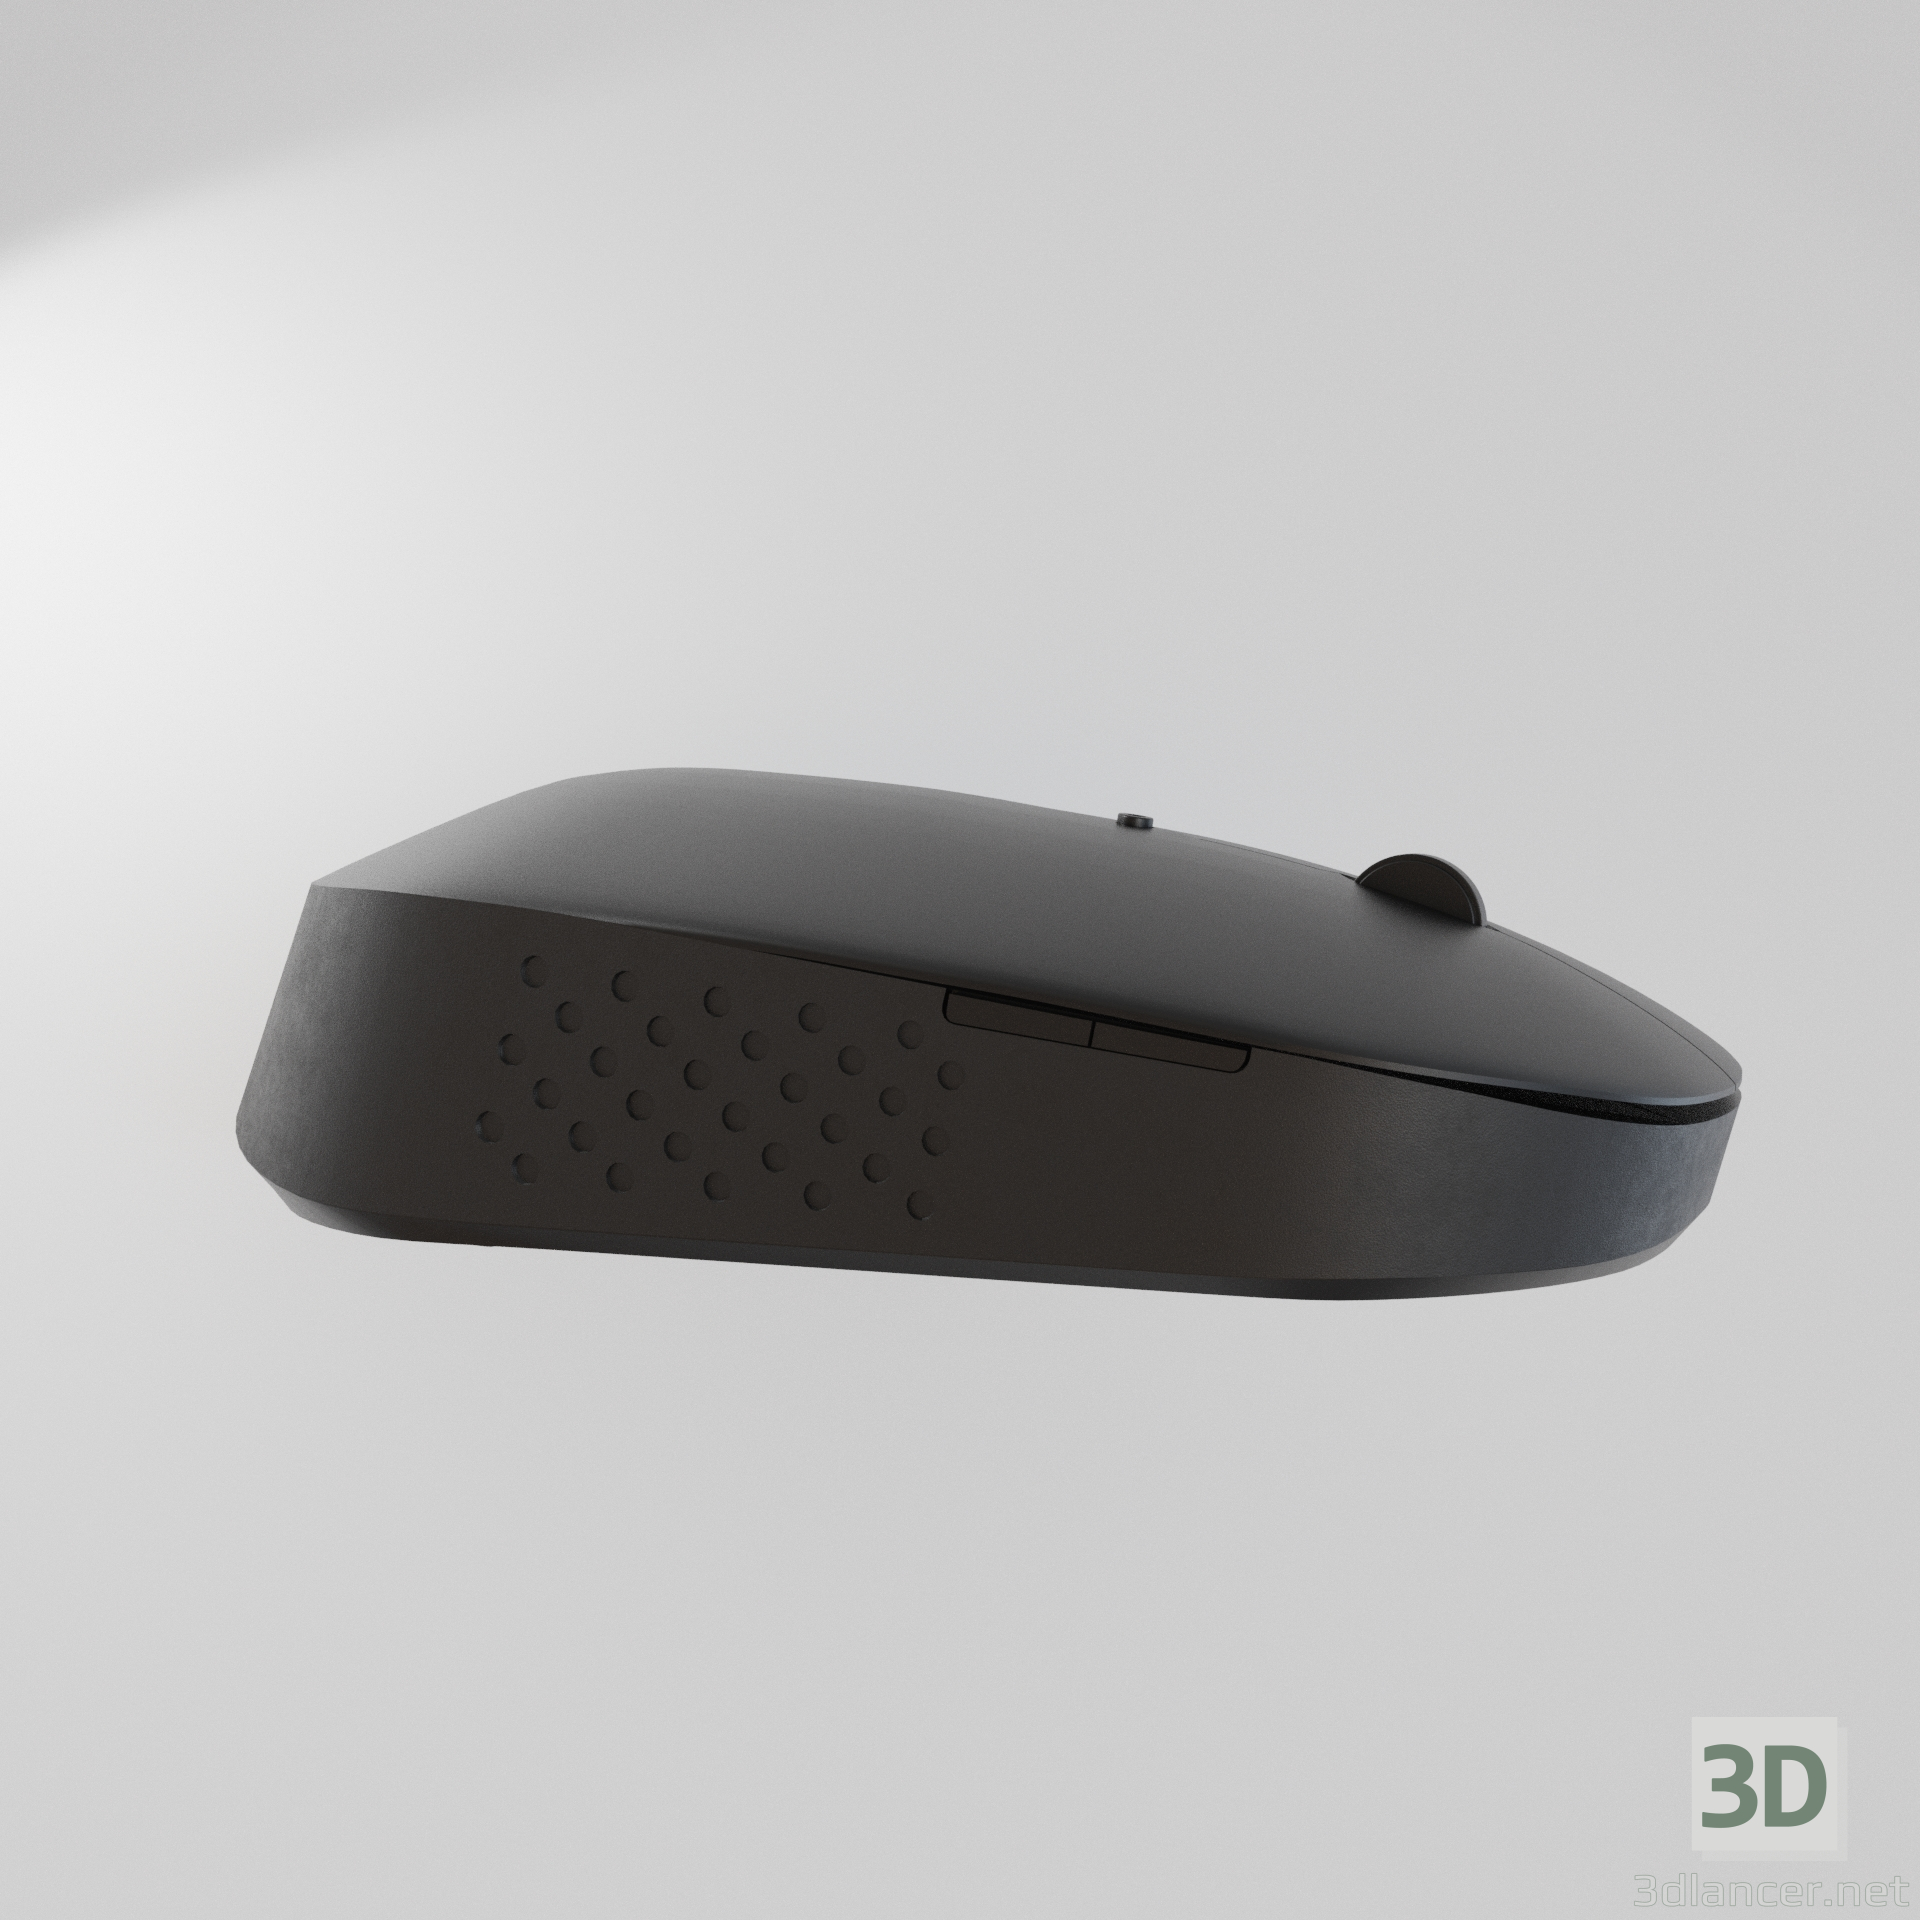 Modelo 3d Mouse sem fio - preview